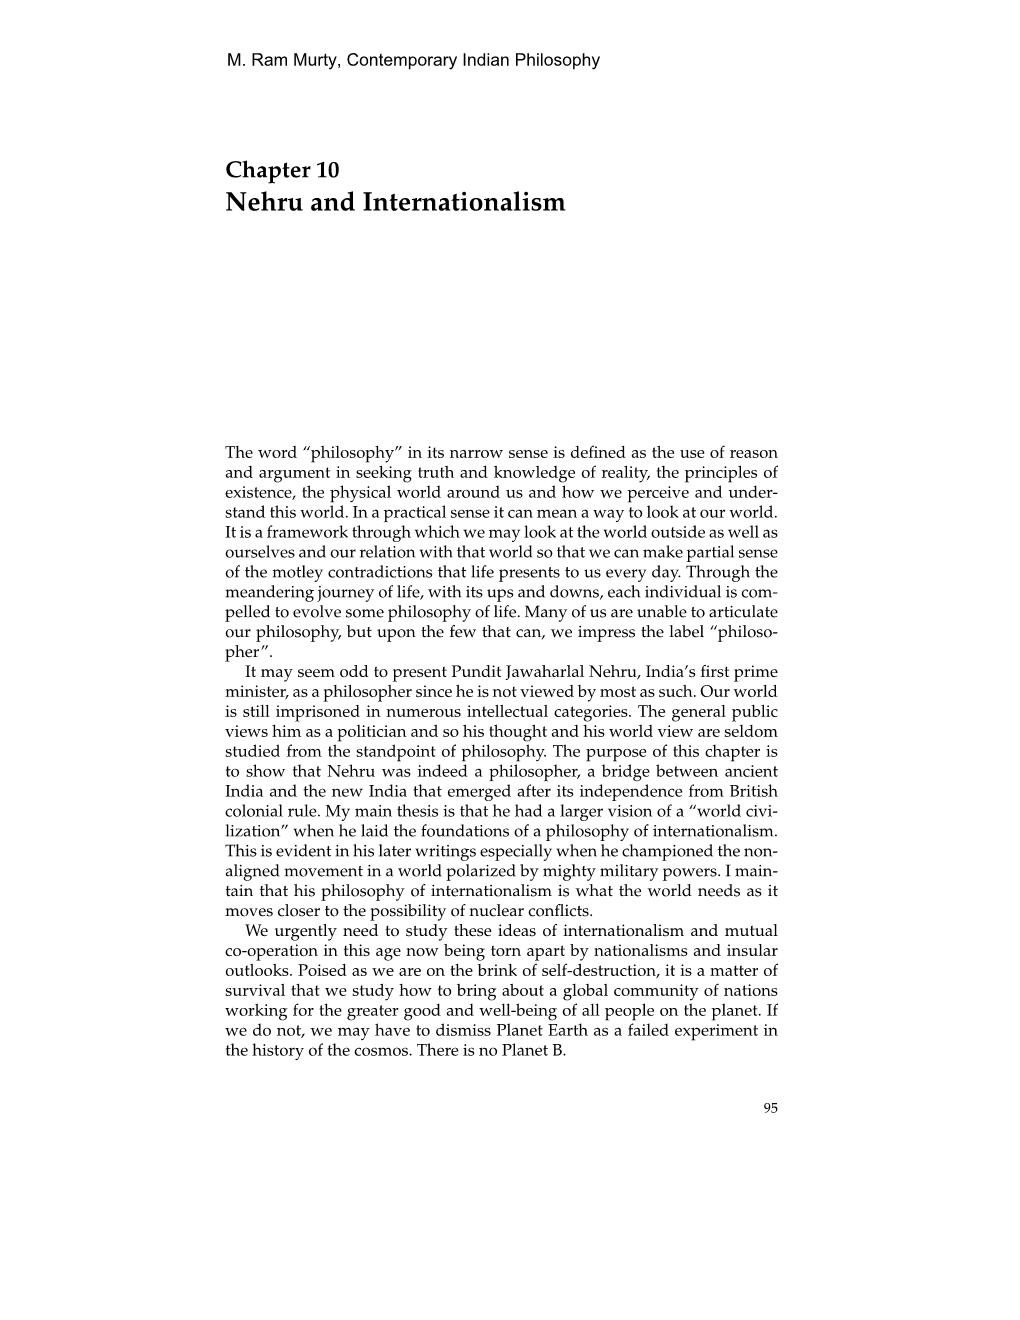 Nehru and Internationalism